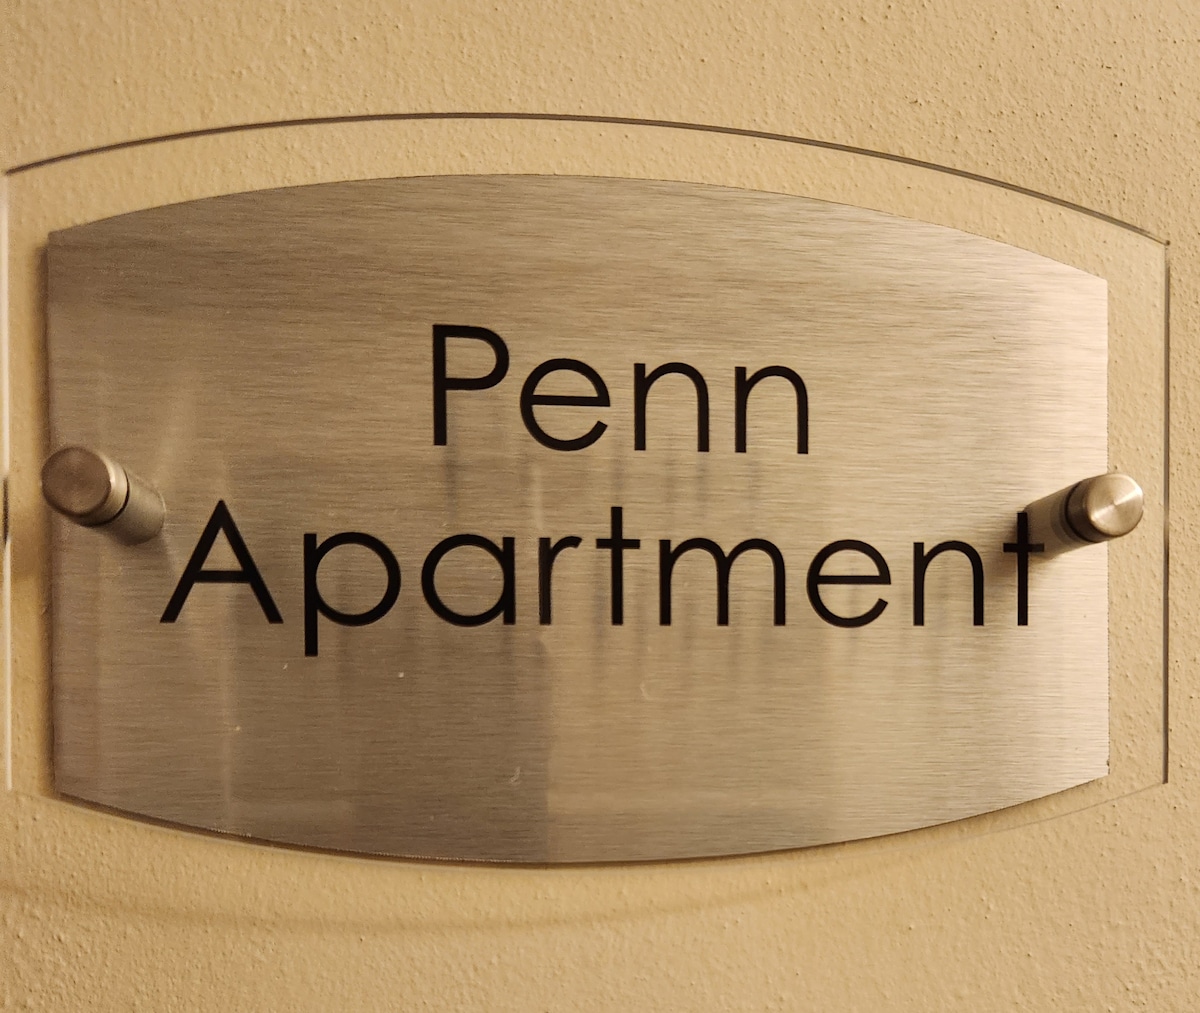 Penn Apartment @ Cropthorne